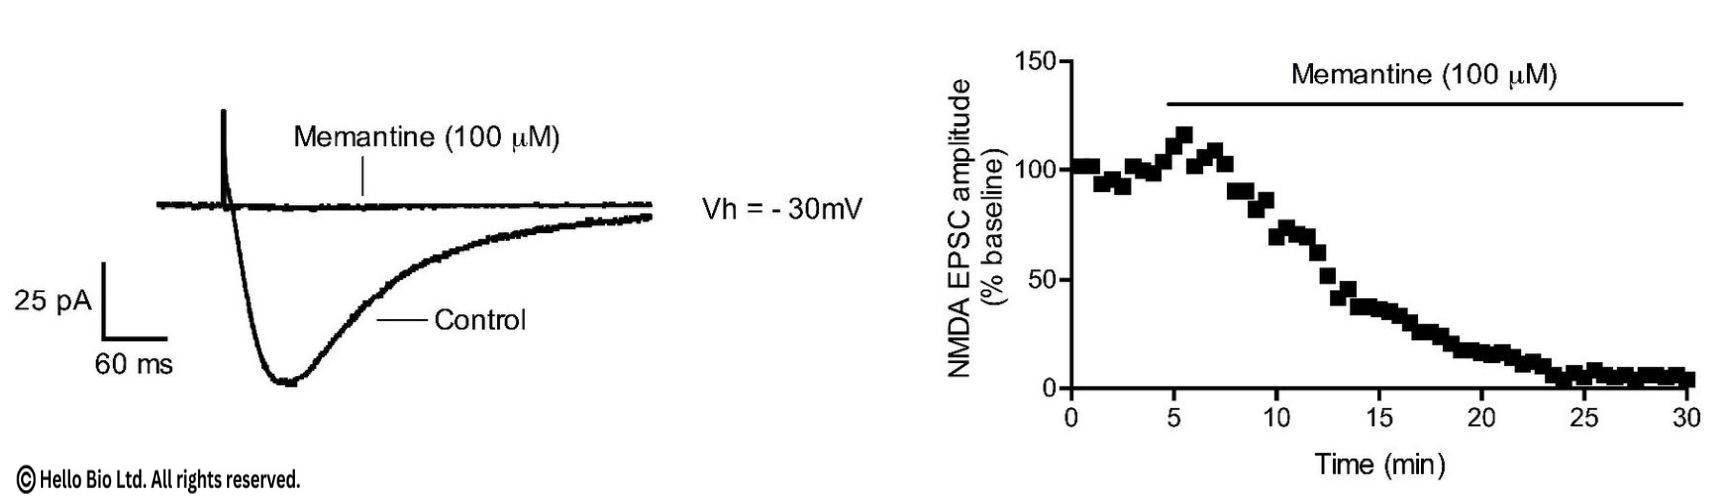 Figure 1. Memantine inhibition of evoked NMDAR mediated EPSCs in rat CA1 pyramidal neuron